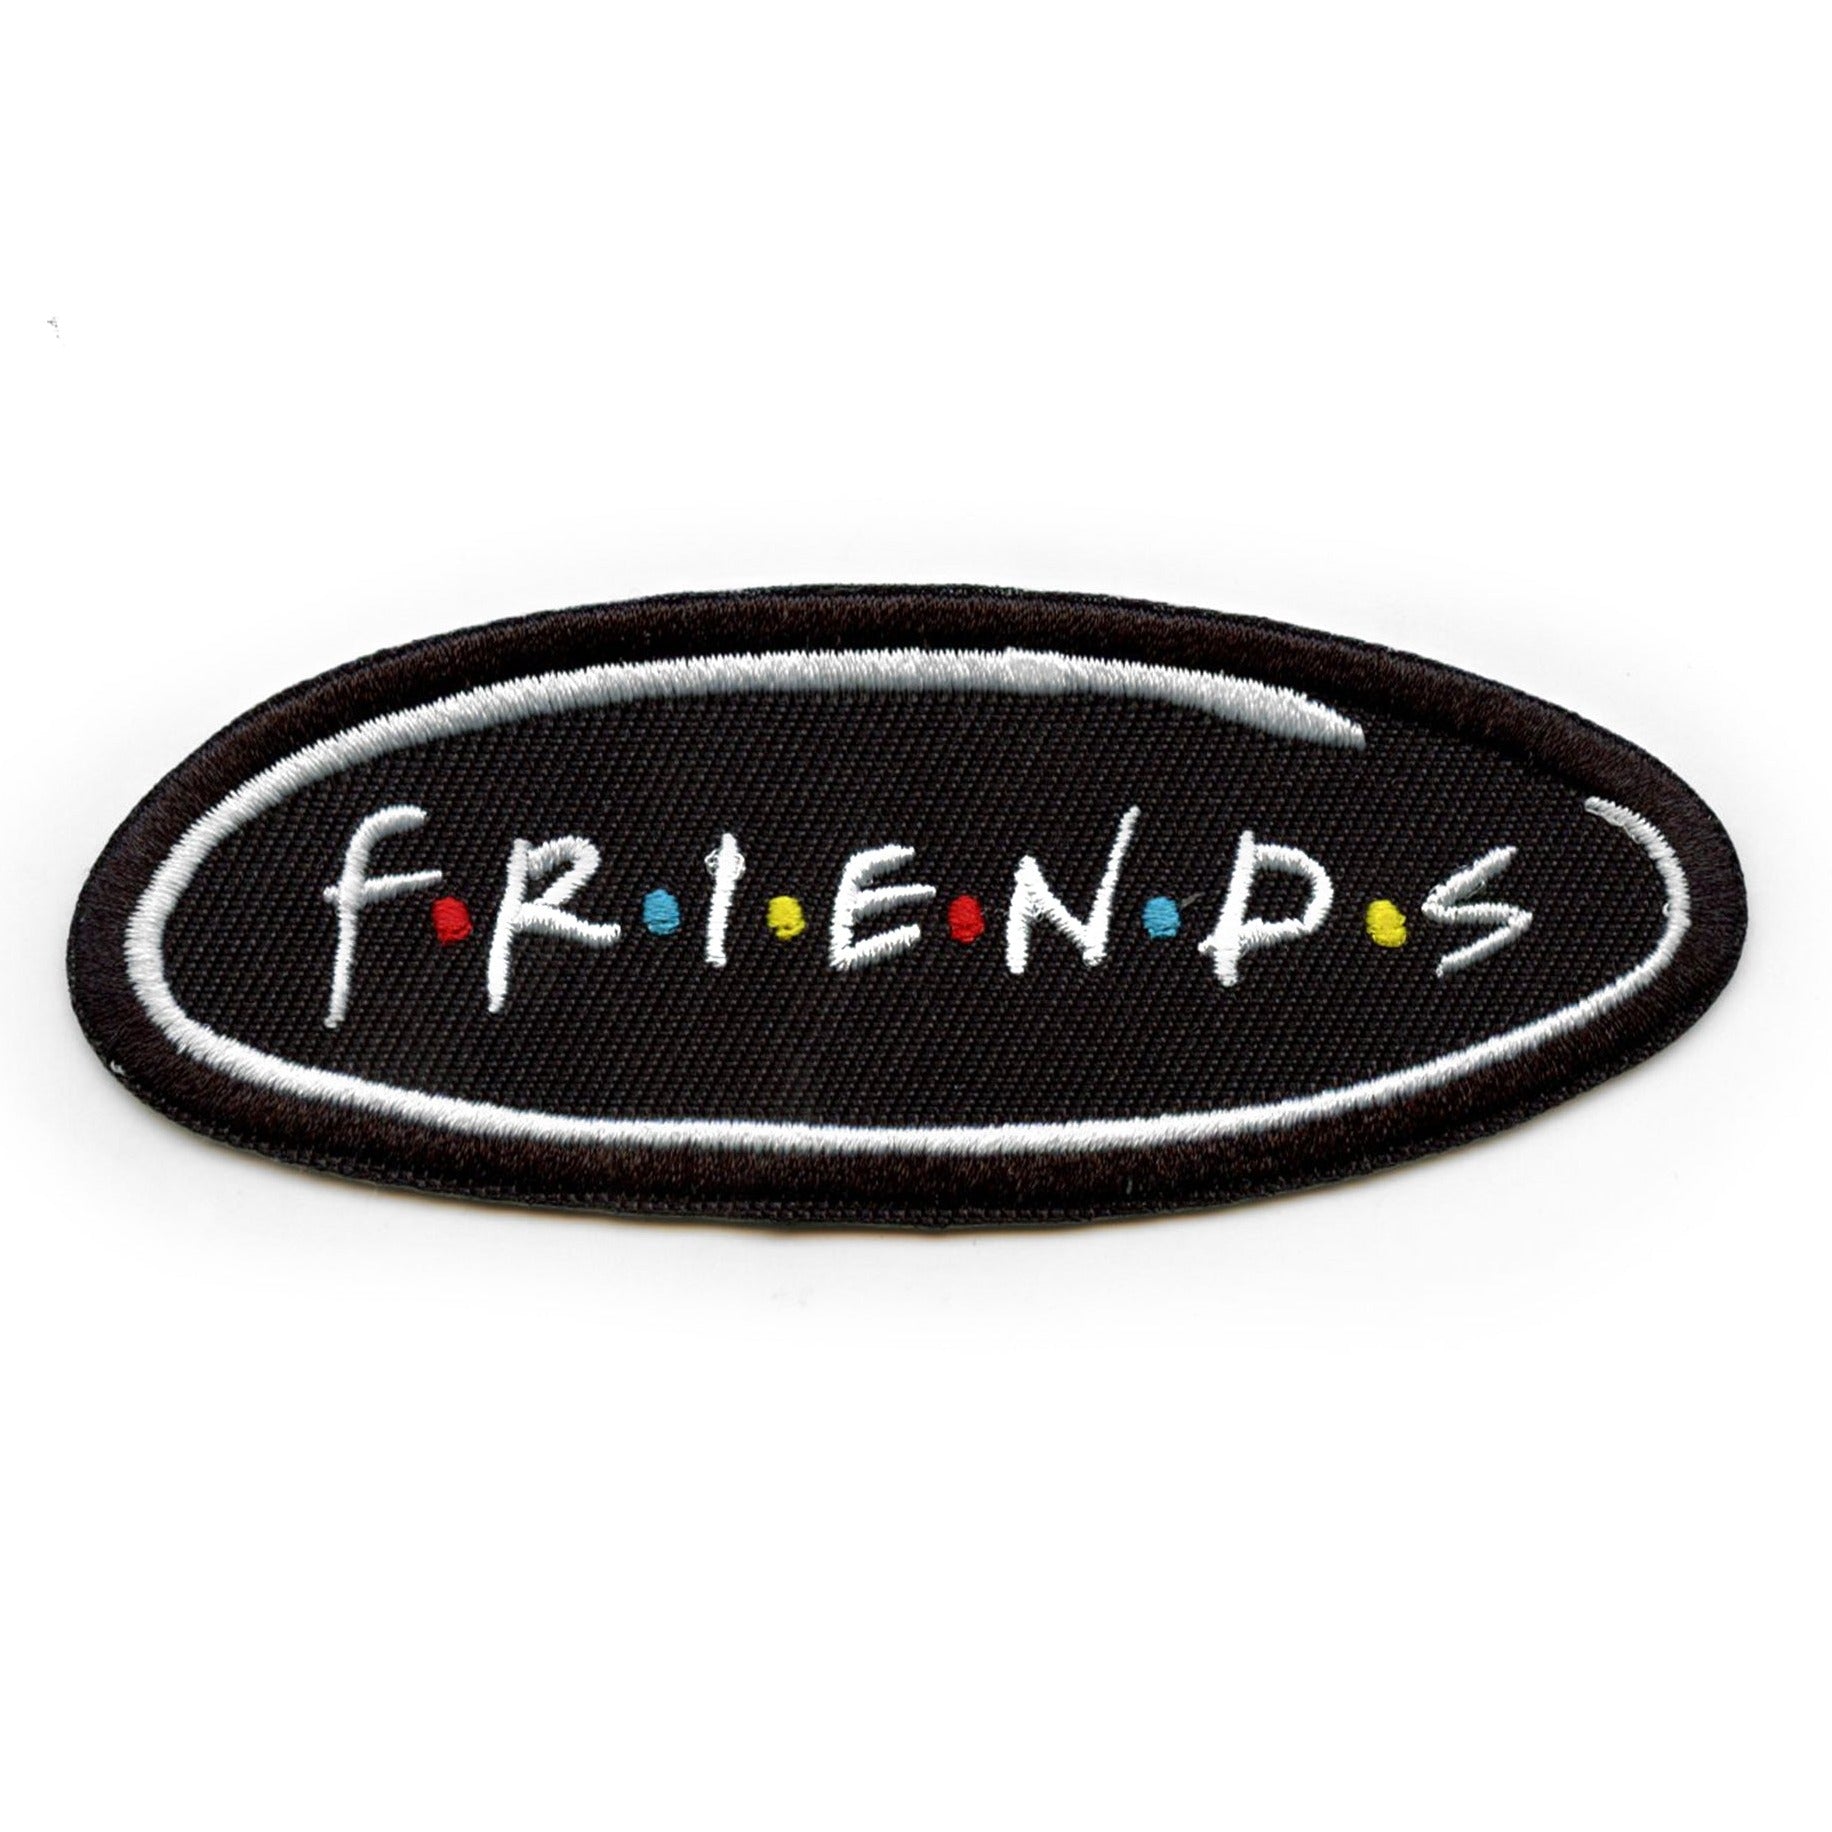 Friends Forever, black, feelings, friendship, corazones, love, red, white,  HD phone wallpaper | Peakpx